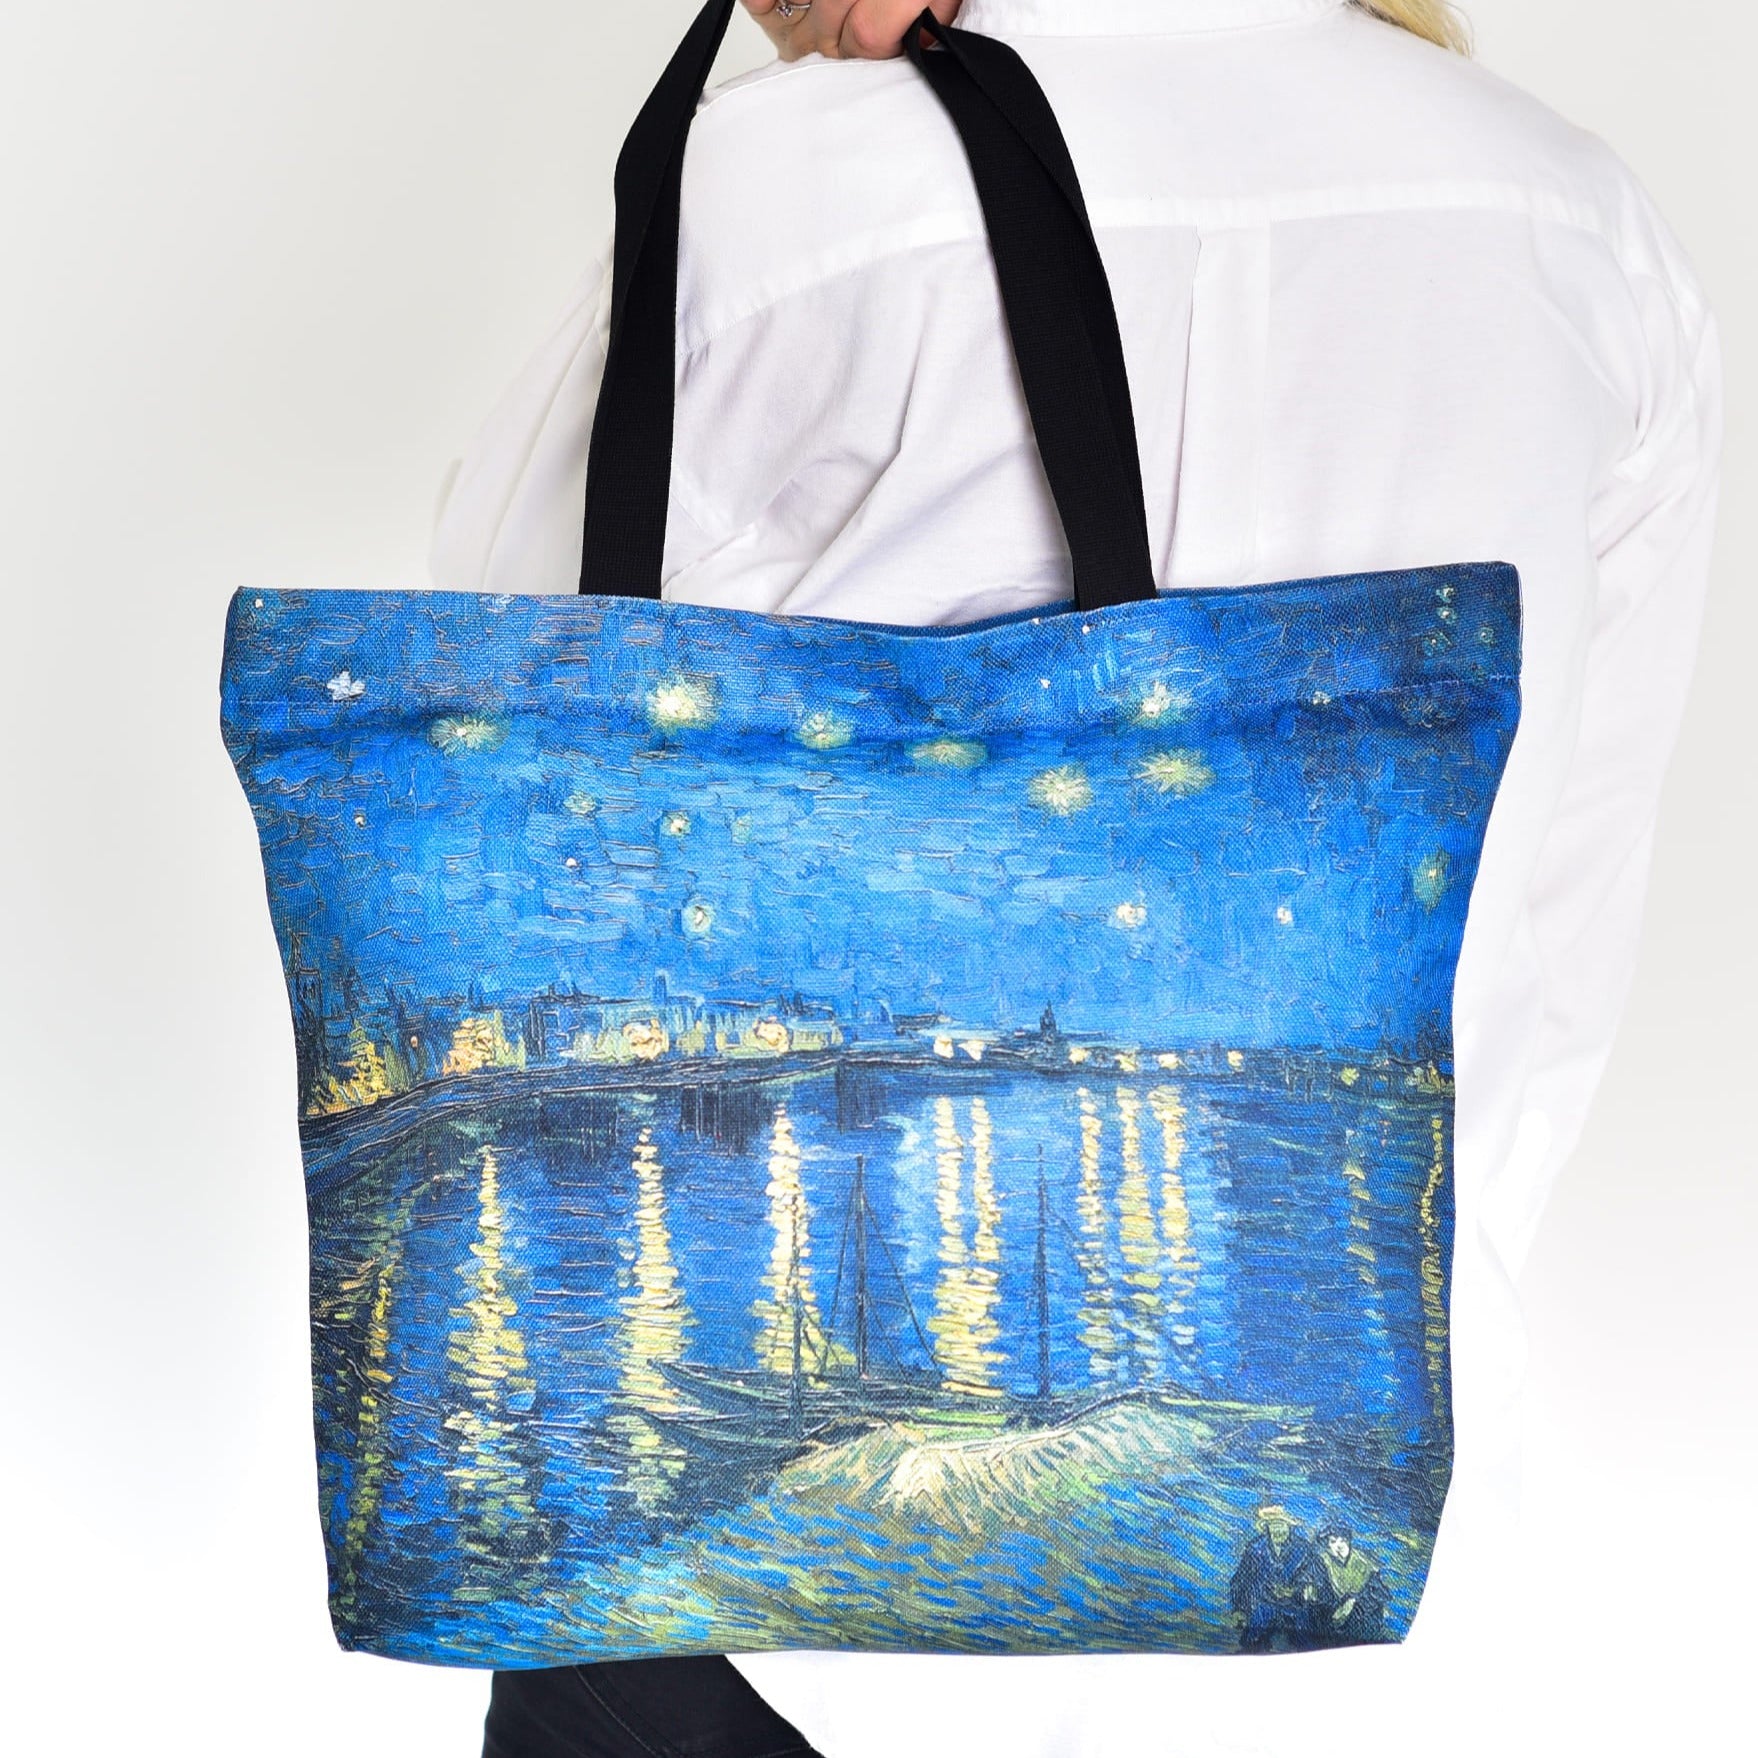 Pirkinių krepšys Vincent van Gogh "Starry Night Over the Rhone"